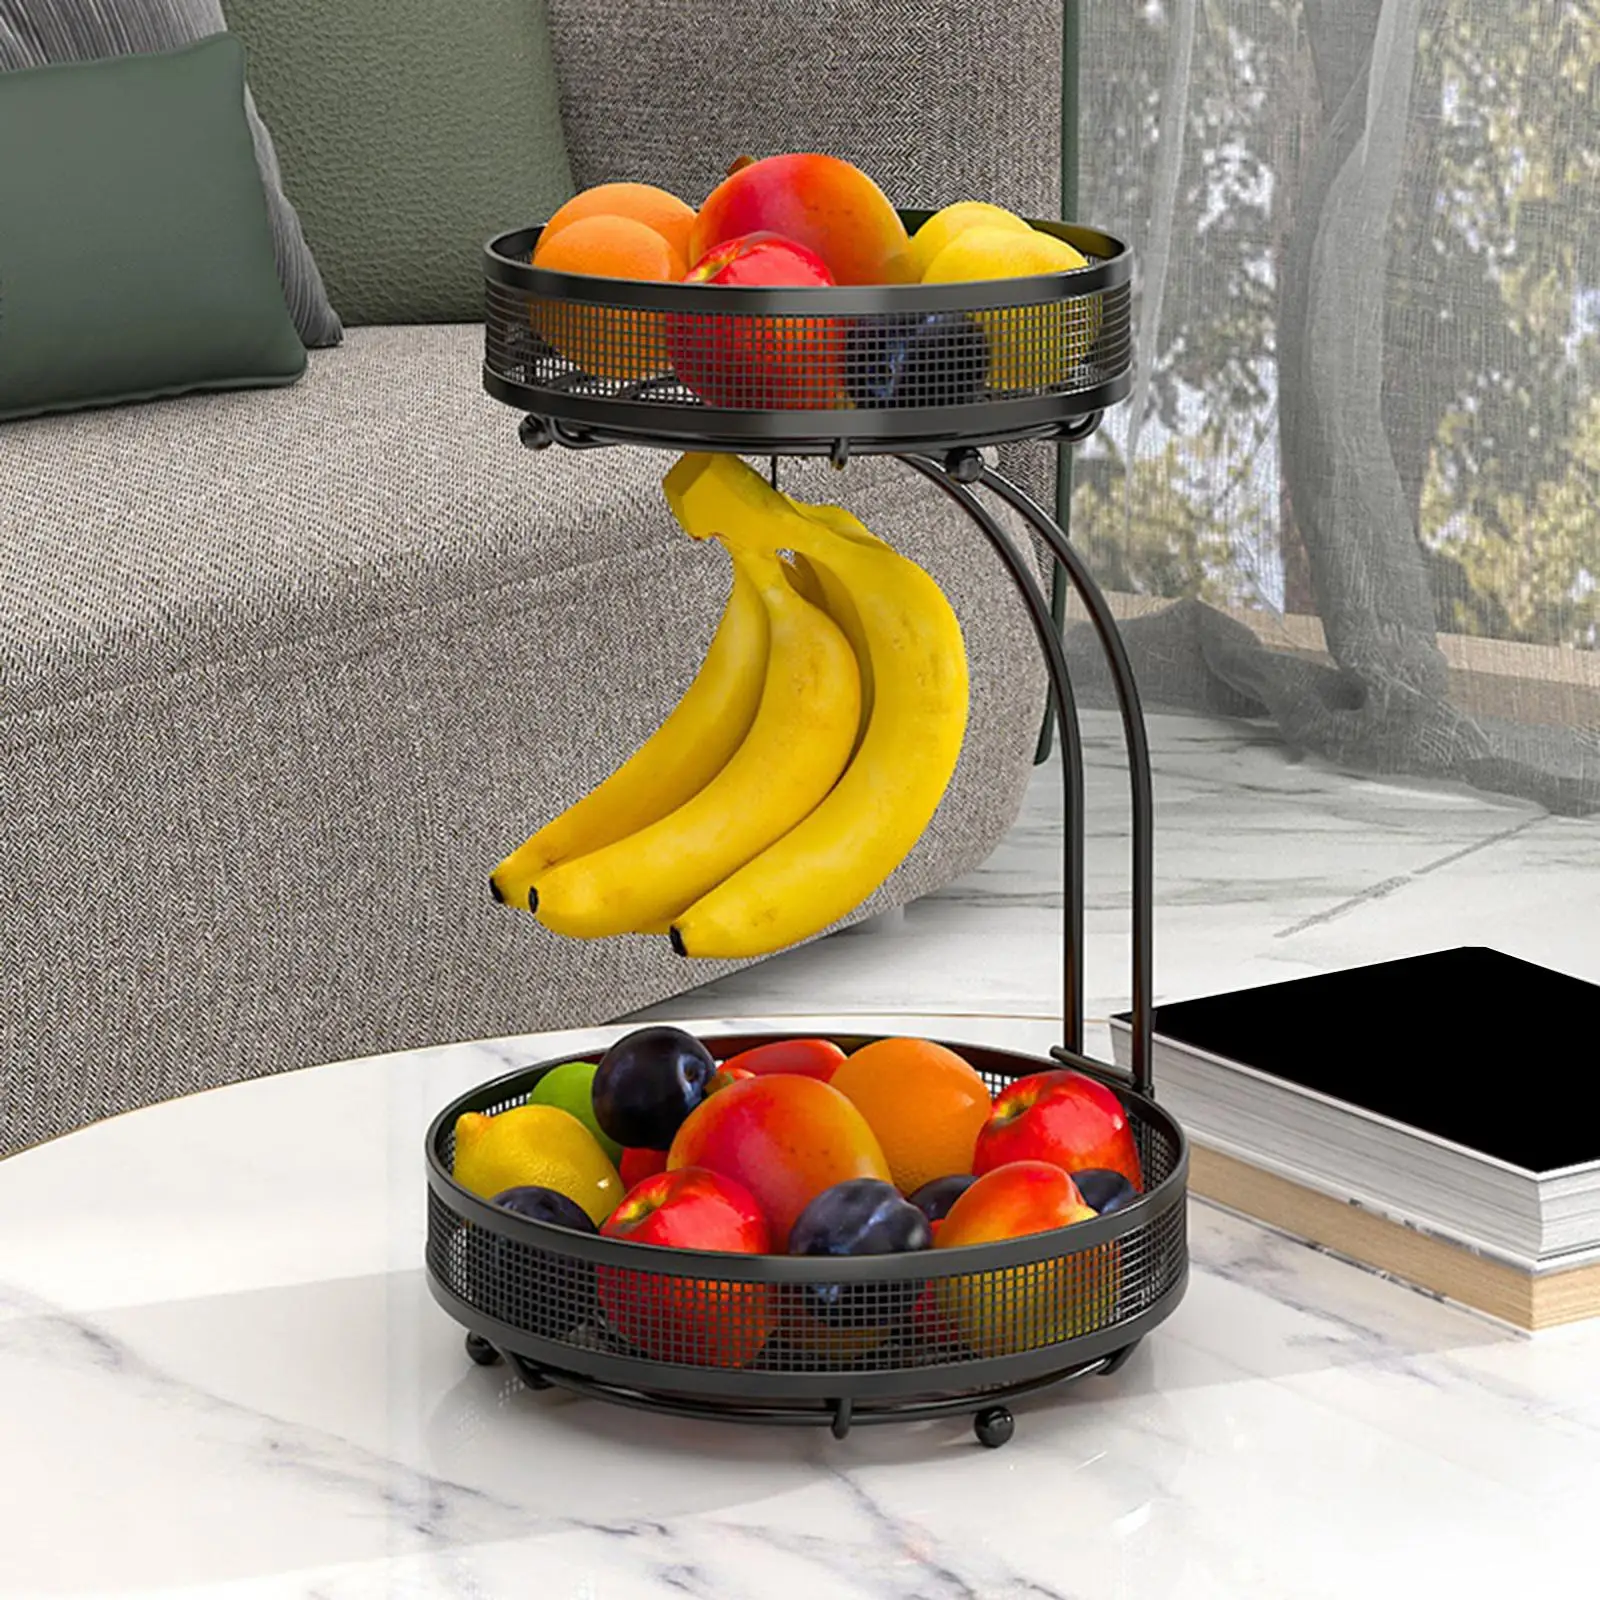 Metal 2 Tier Fruit Basket with Banana Hanger for Kitchen Multifunction Fruit Vegetable Storage Holder Display for Produce Bread